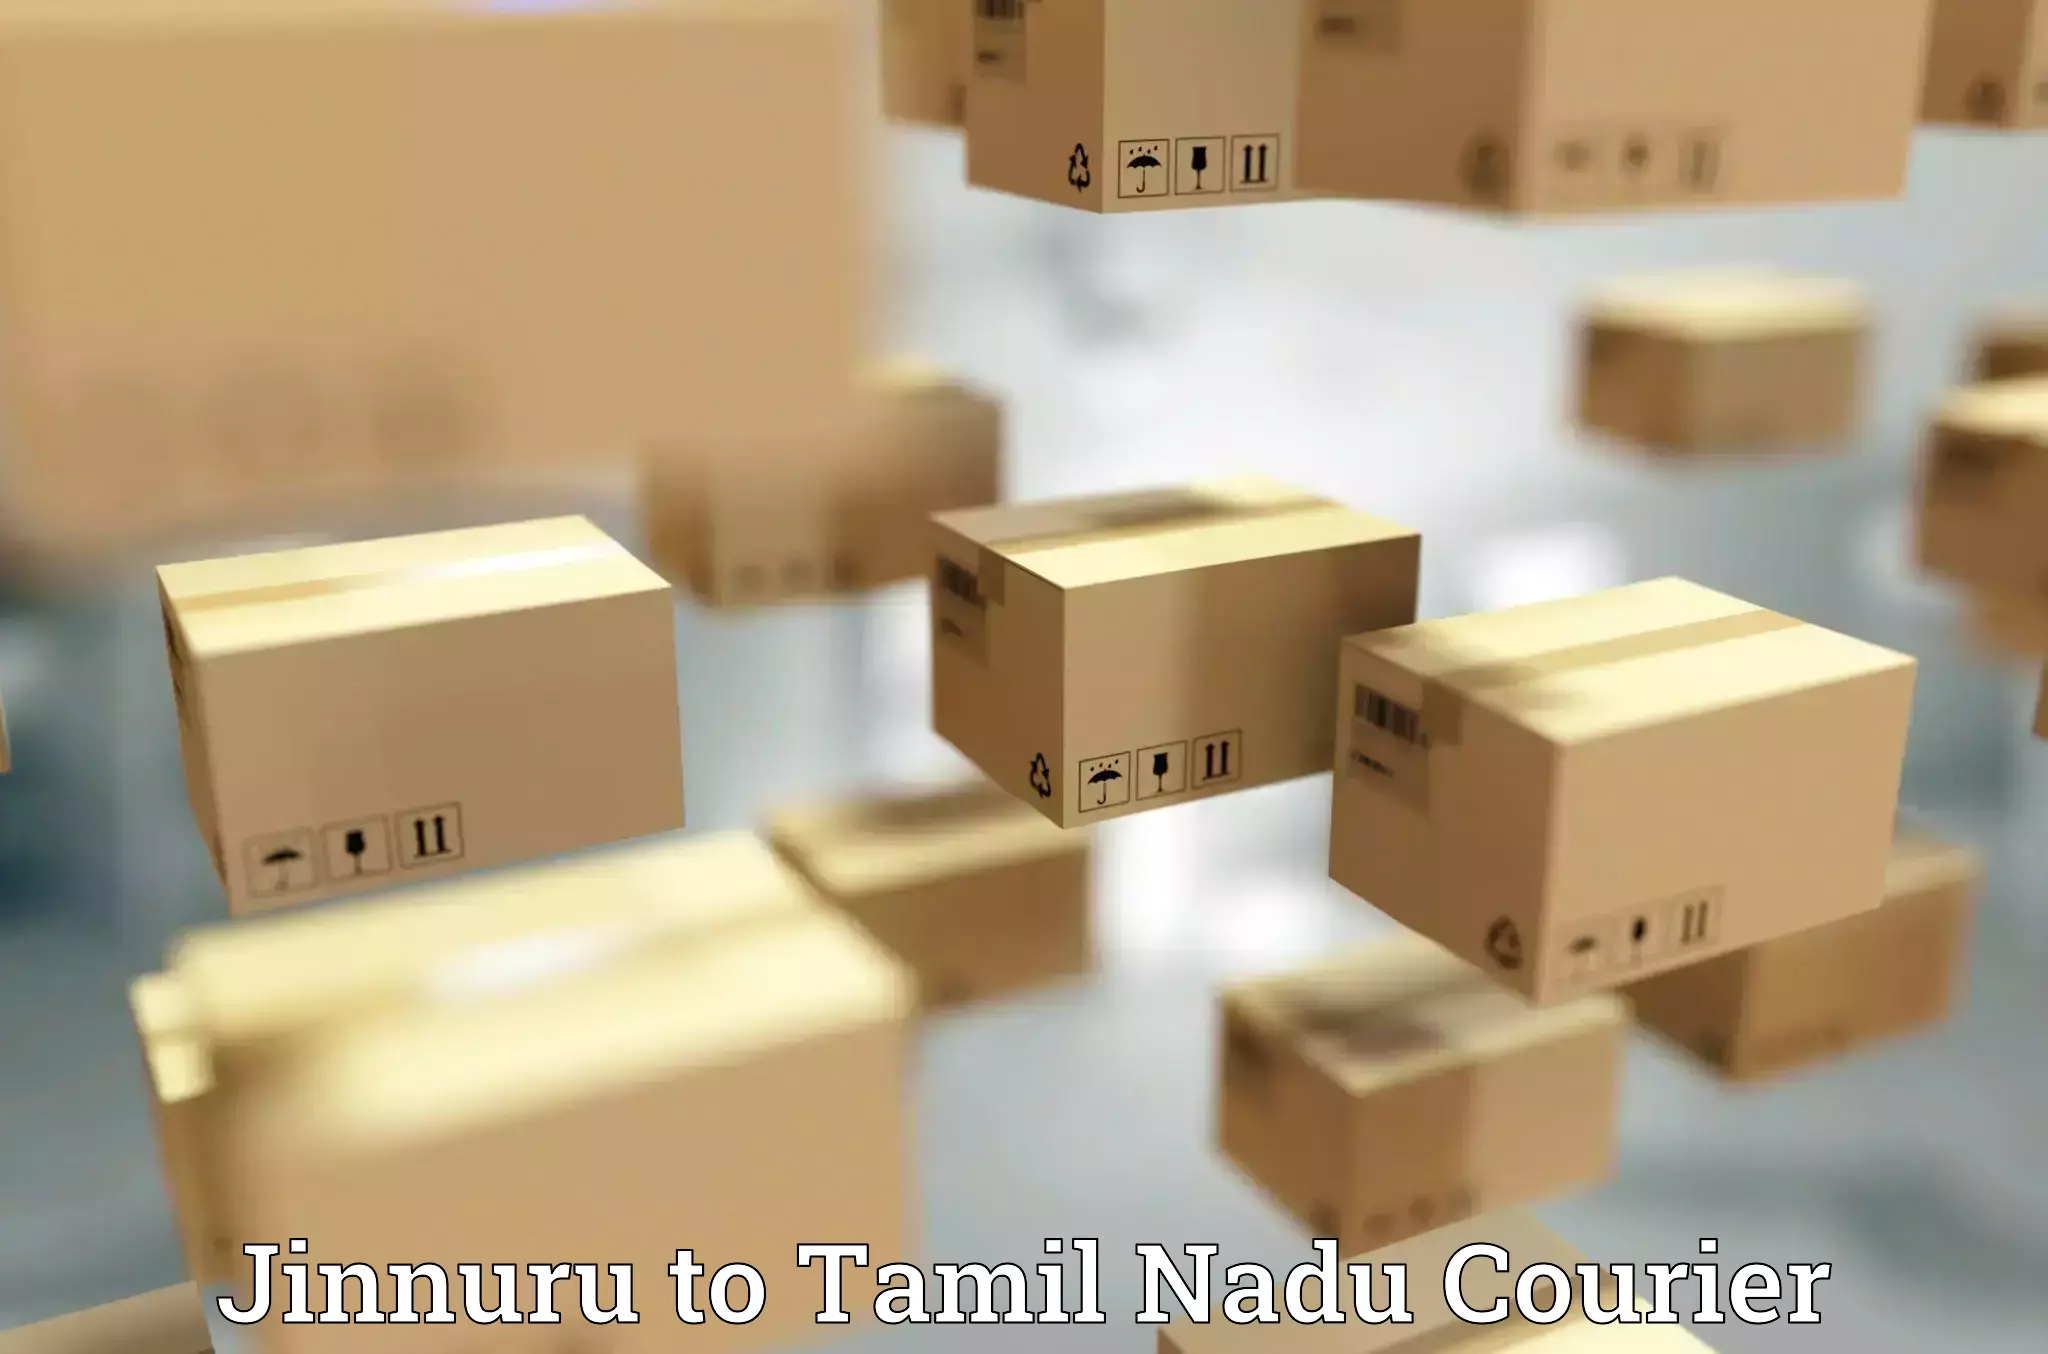 Nationwide delivery network Jinnuru to Tamil Nadu